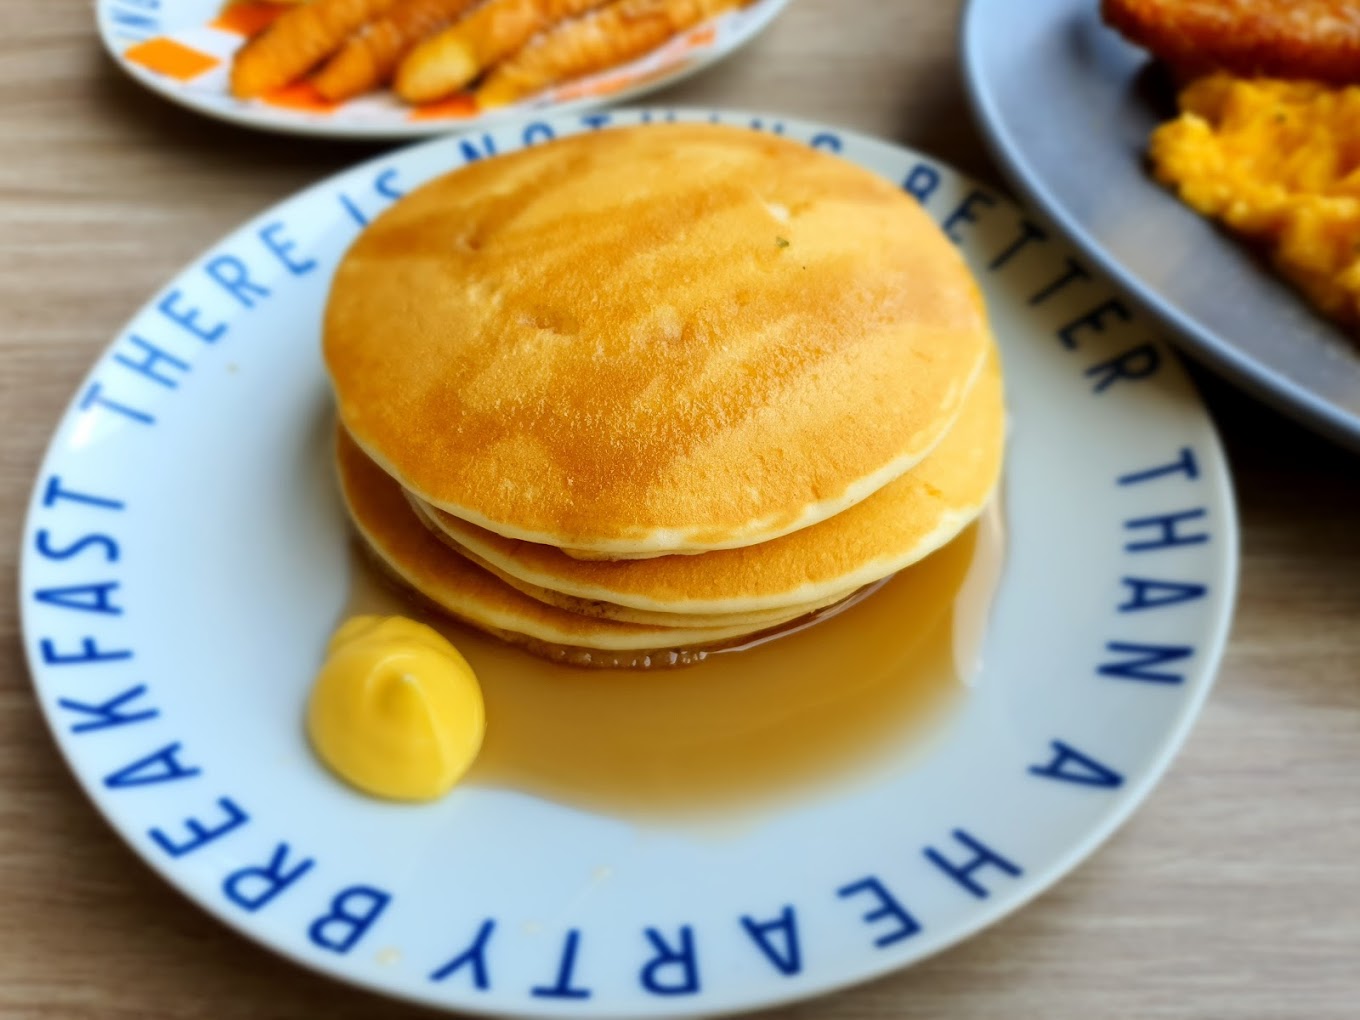 Breakfast-Club-tiong-bahru-plaza-pancakes (1)